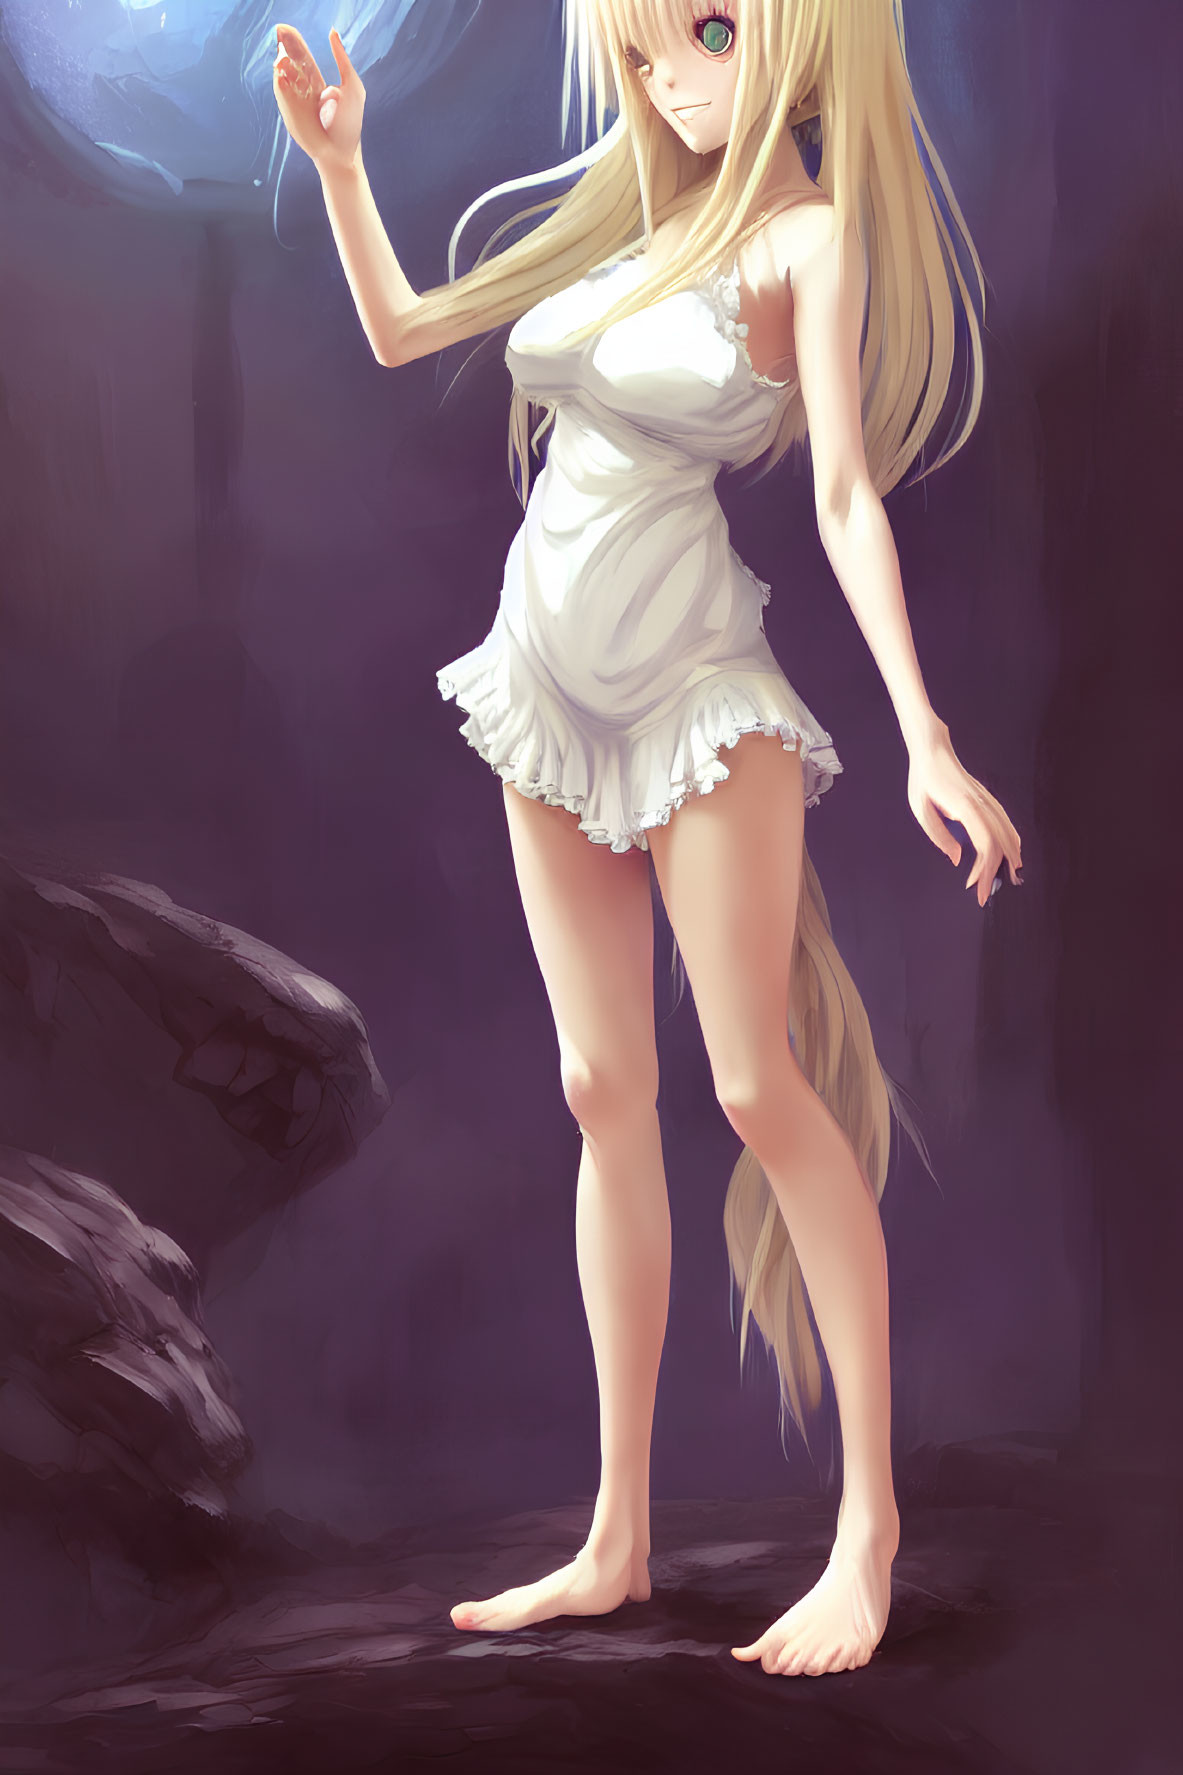 Blonde anime girl in white dress against mystical background